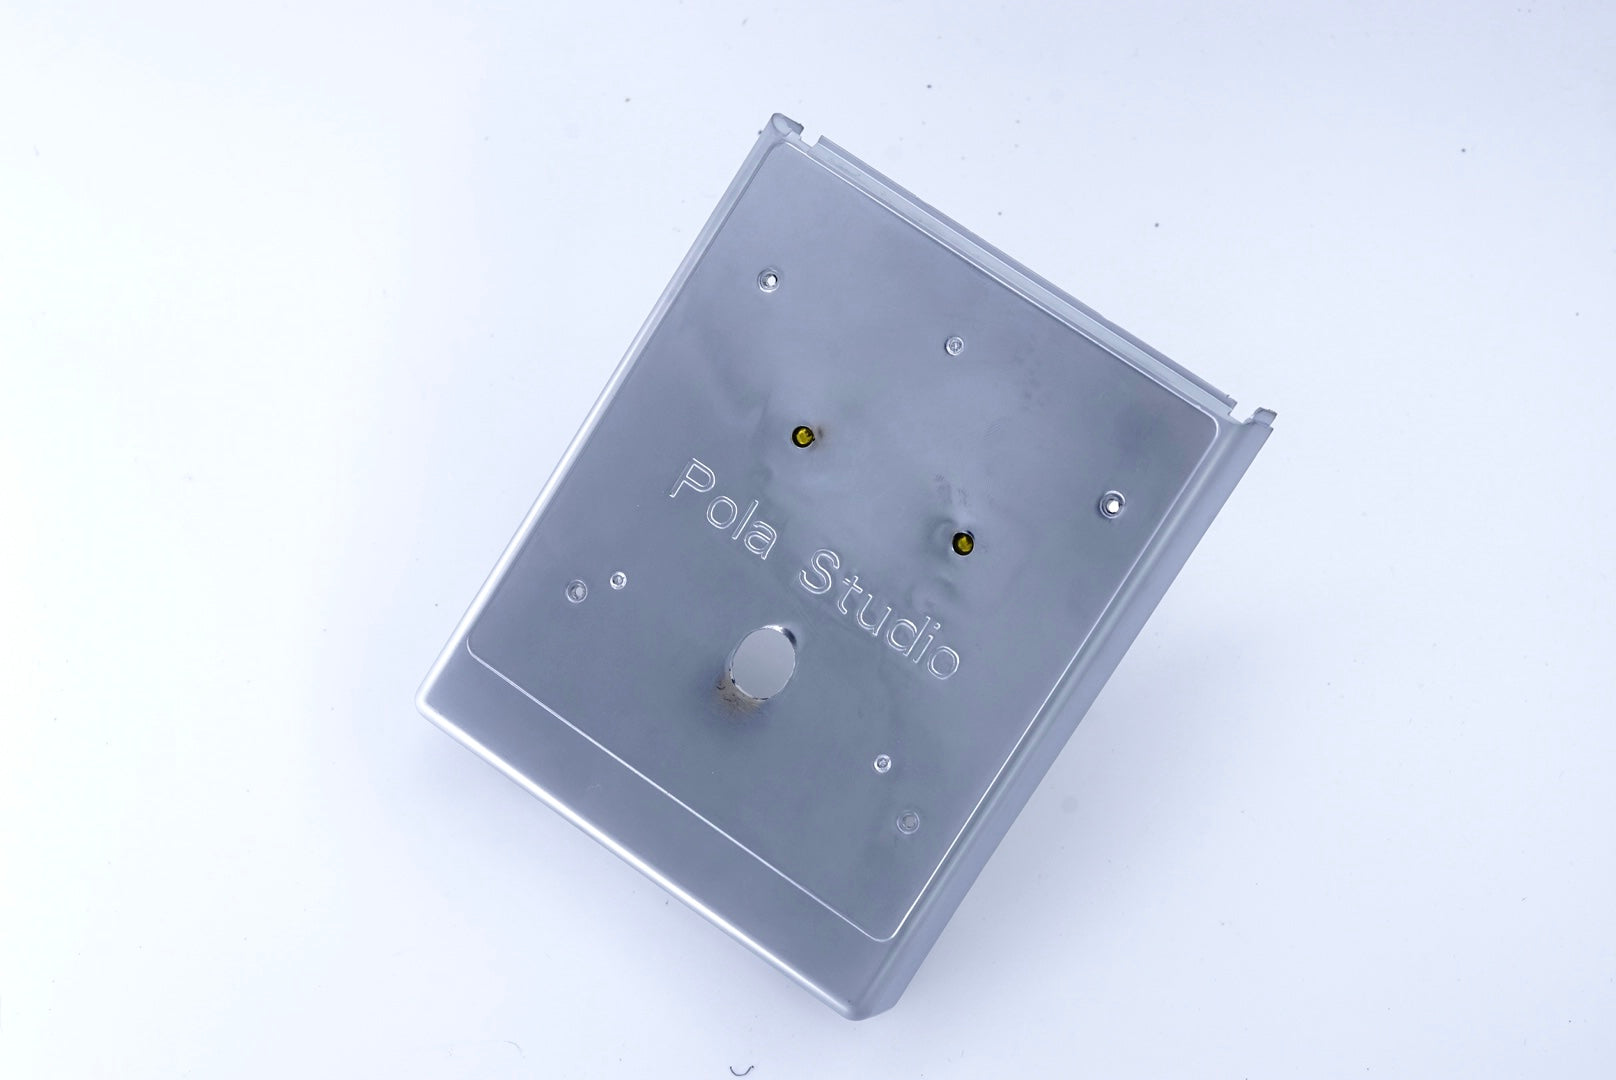 Polaroid sx70/sonar/680/690 camera skin Replacement BLACK LV LOGO –  PolaStudio